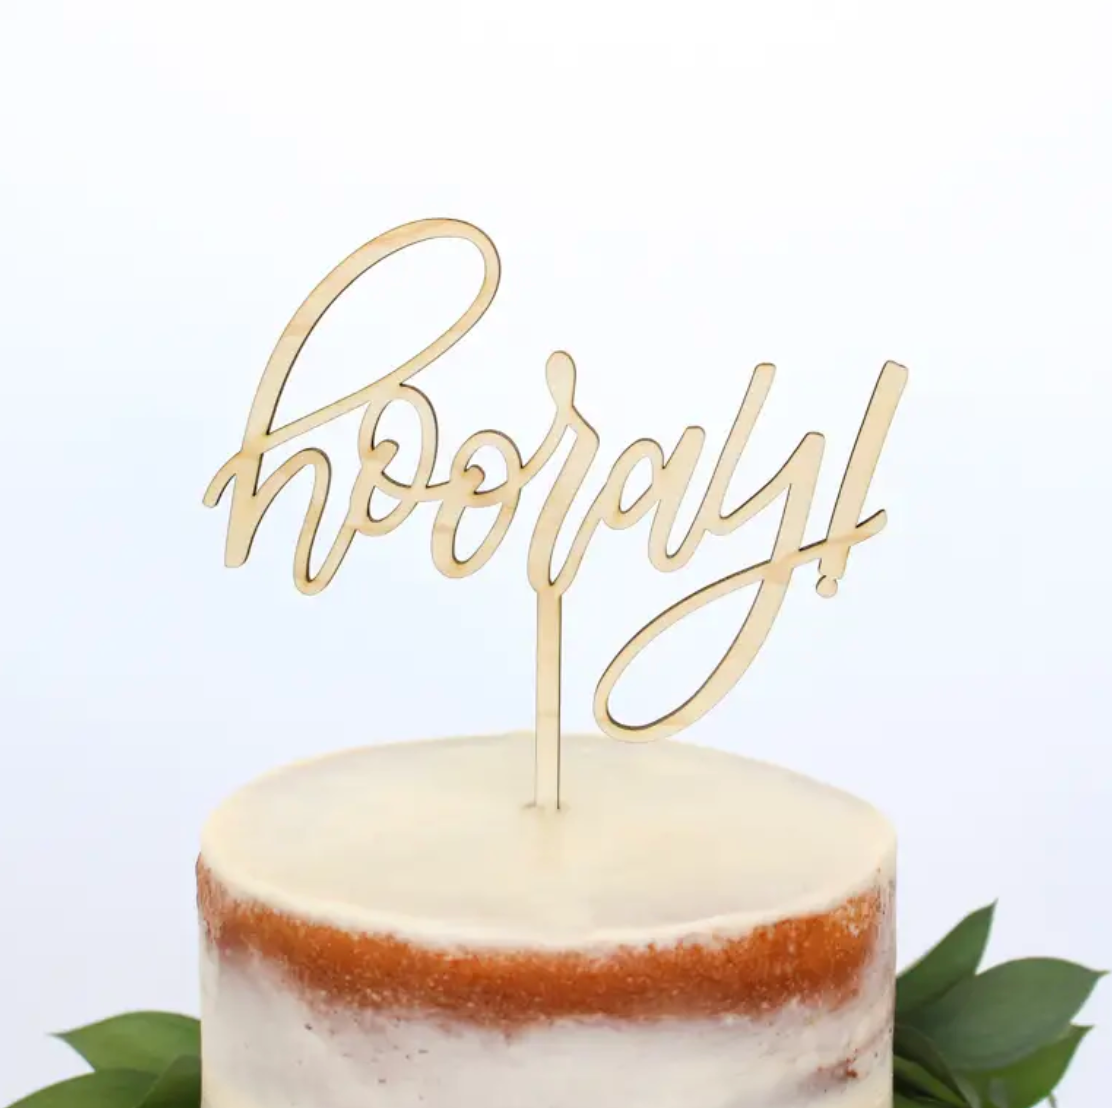 Hooray Cake Topper - CJ Gift Shoppe